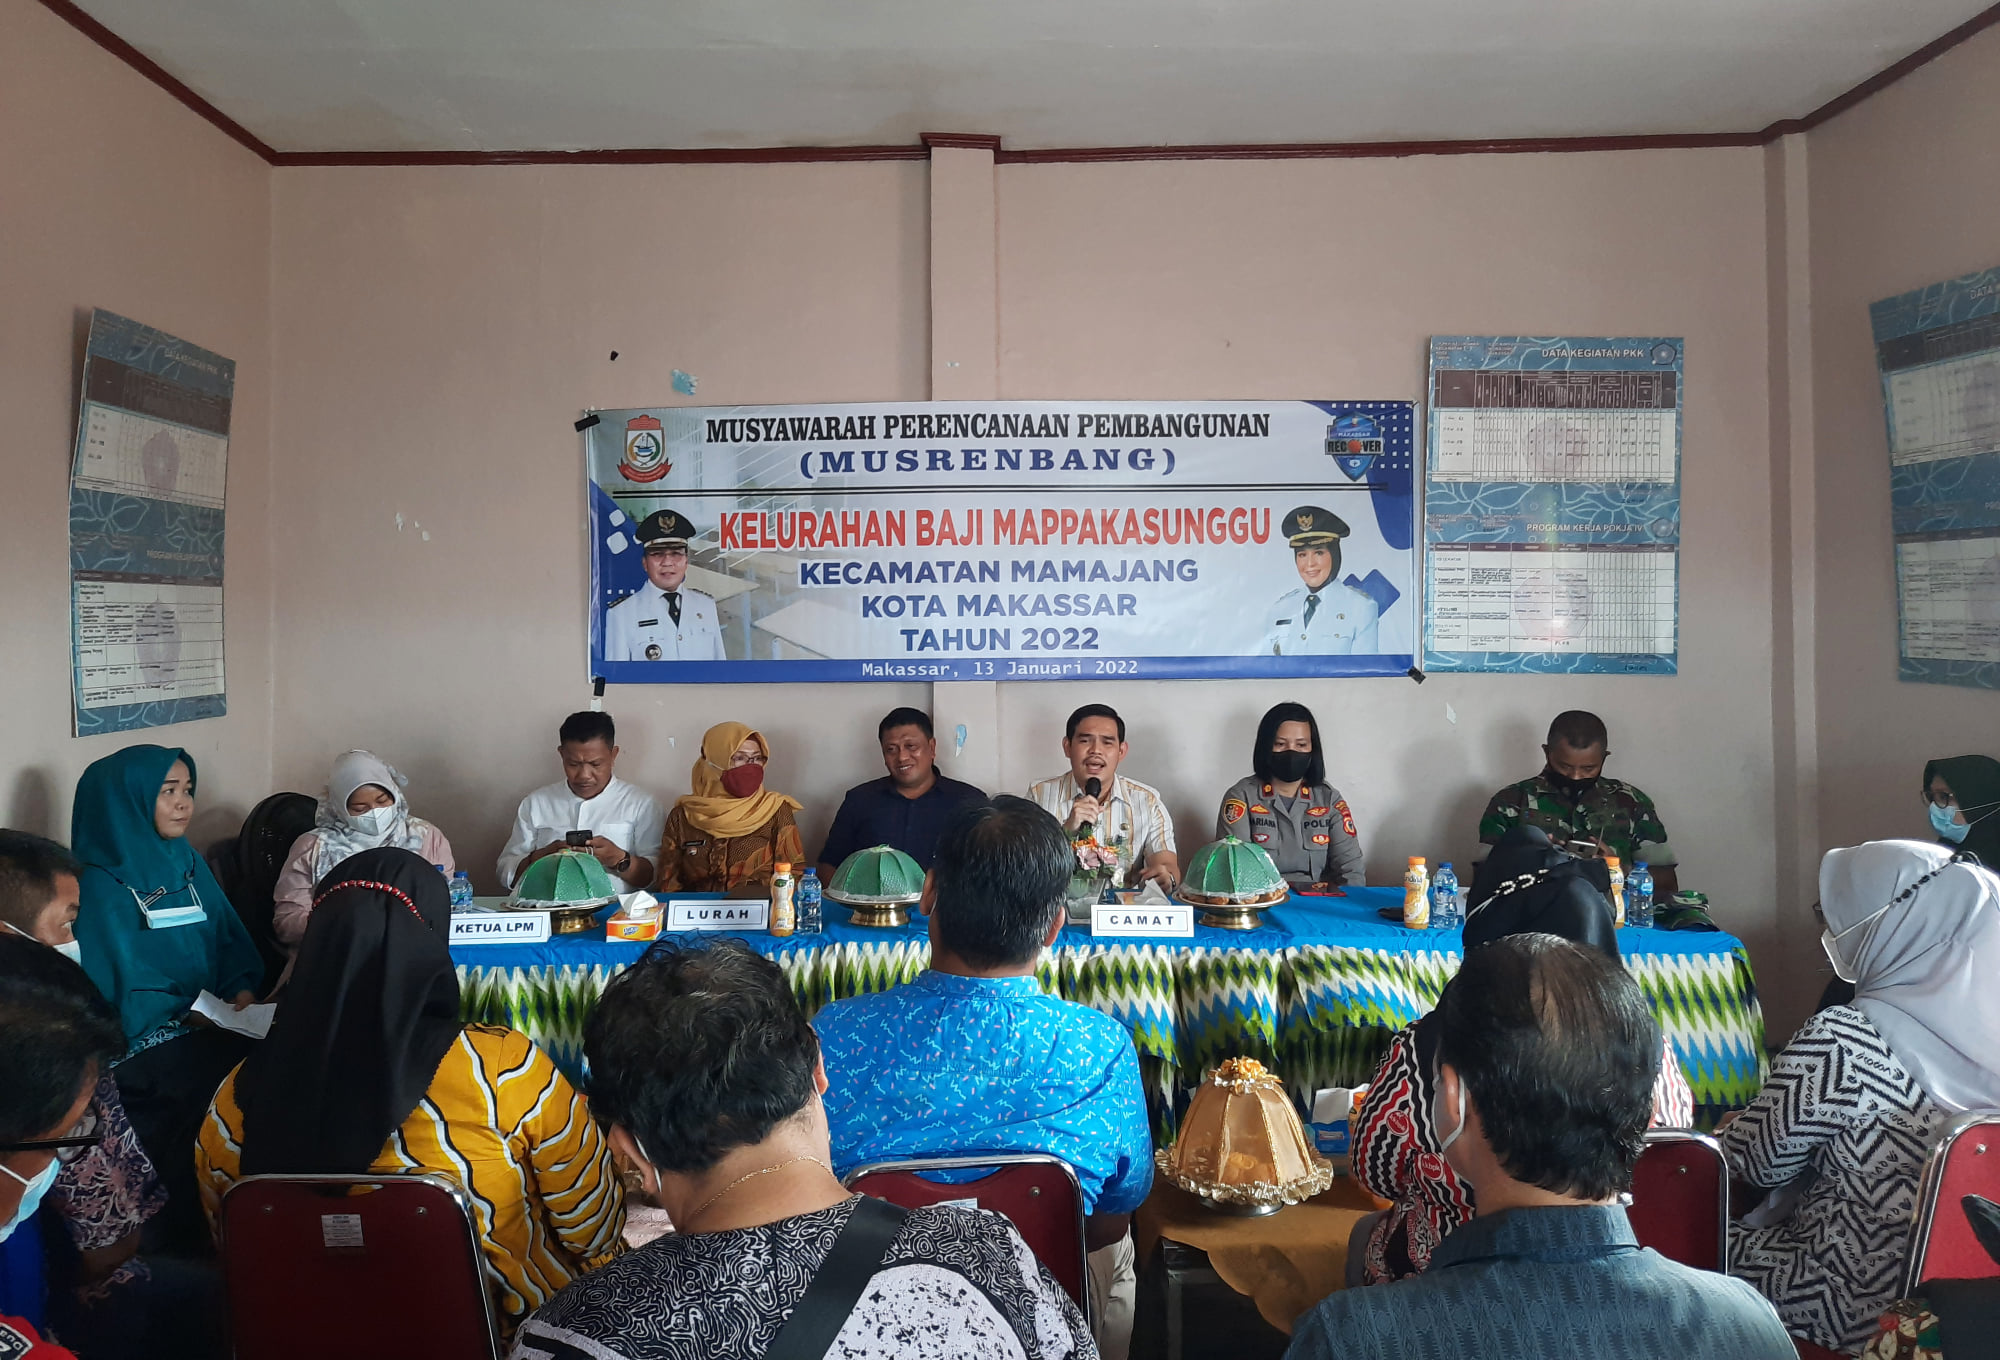 Gambar Plt Camat Mamajang M. Ari Fadli, S.STP membuka kegiatan Musyawarah Perencanaan Pembangunan (MUSRENBANG) Kelurahan Baji Mappakasunggu